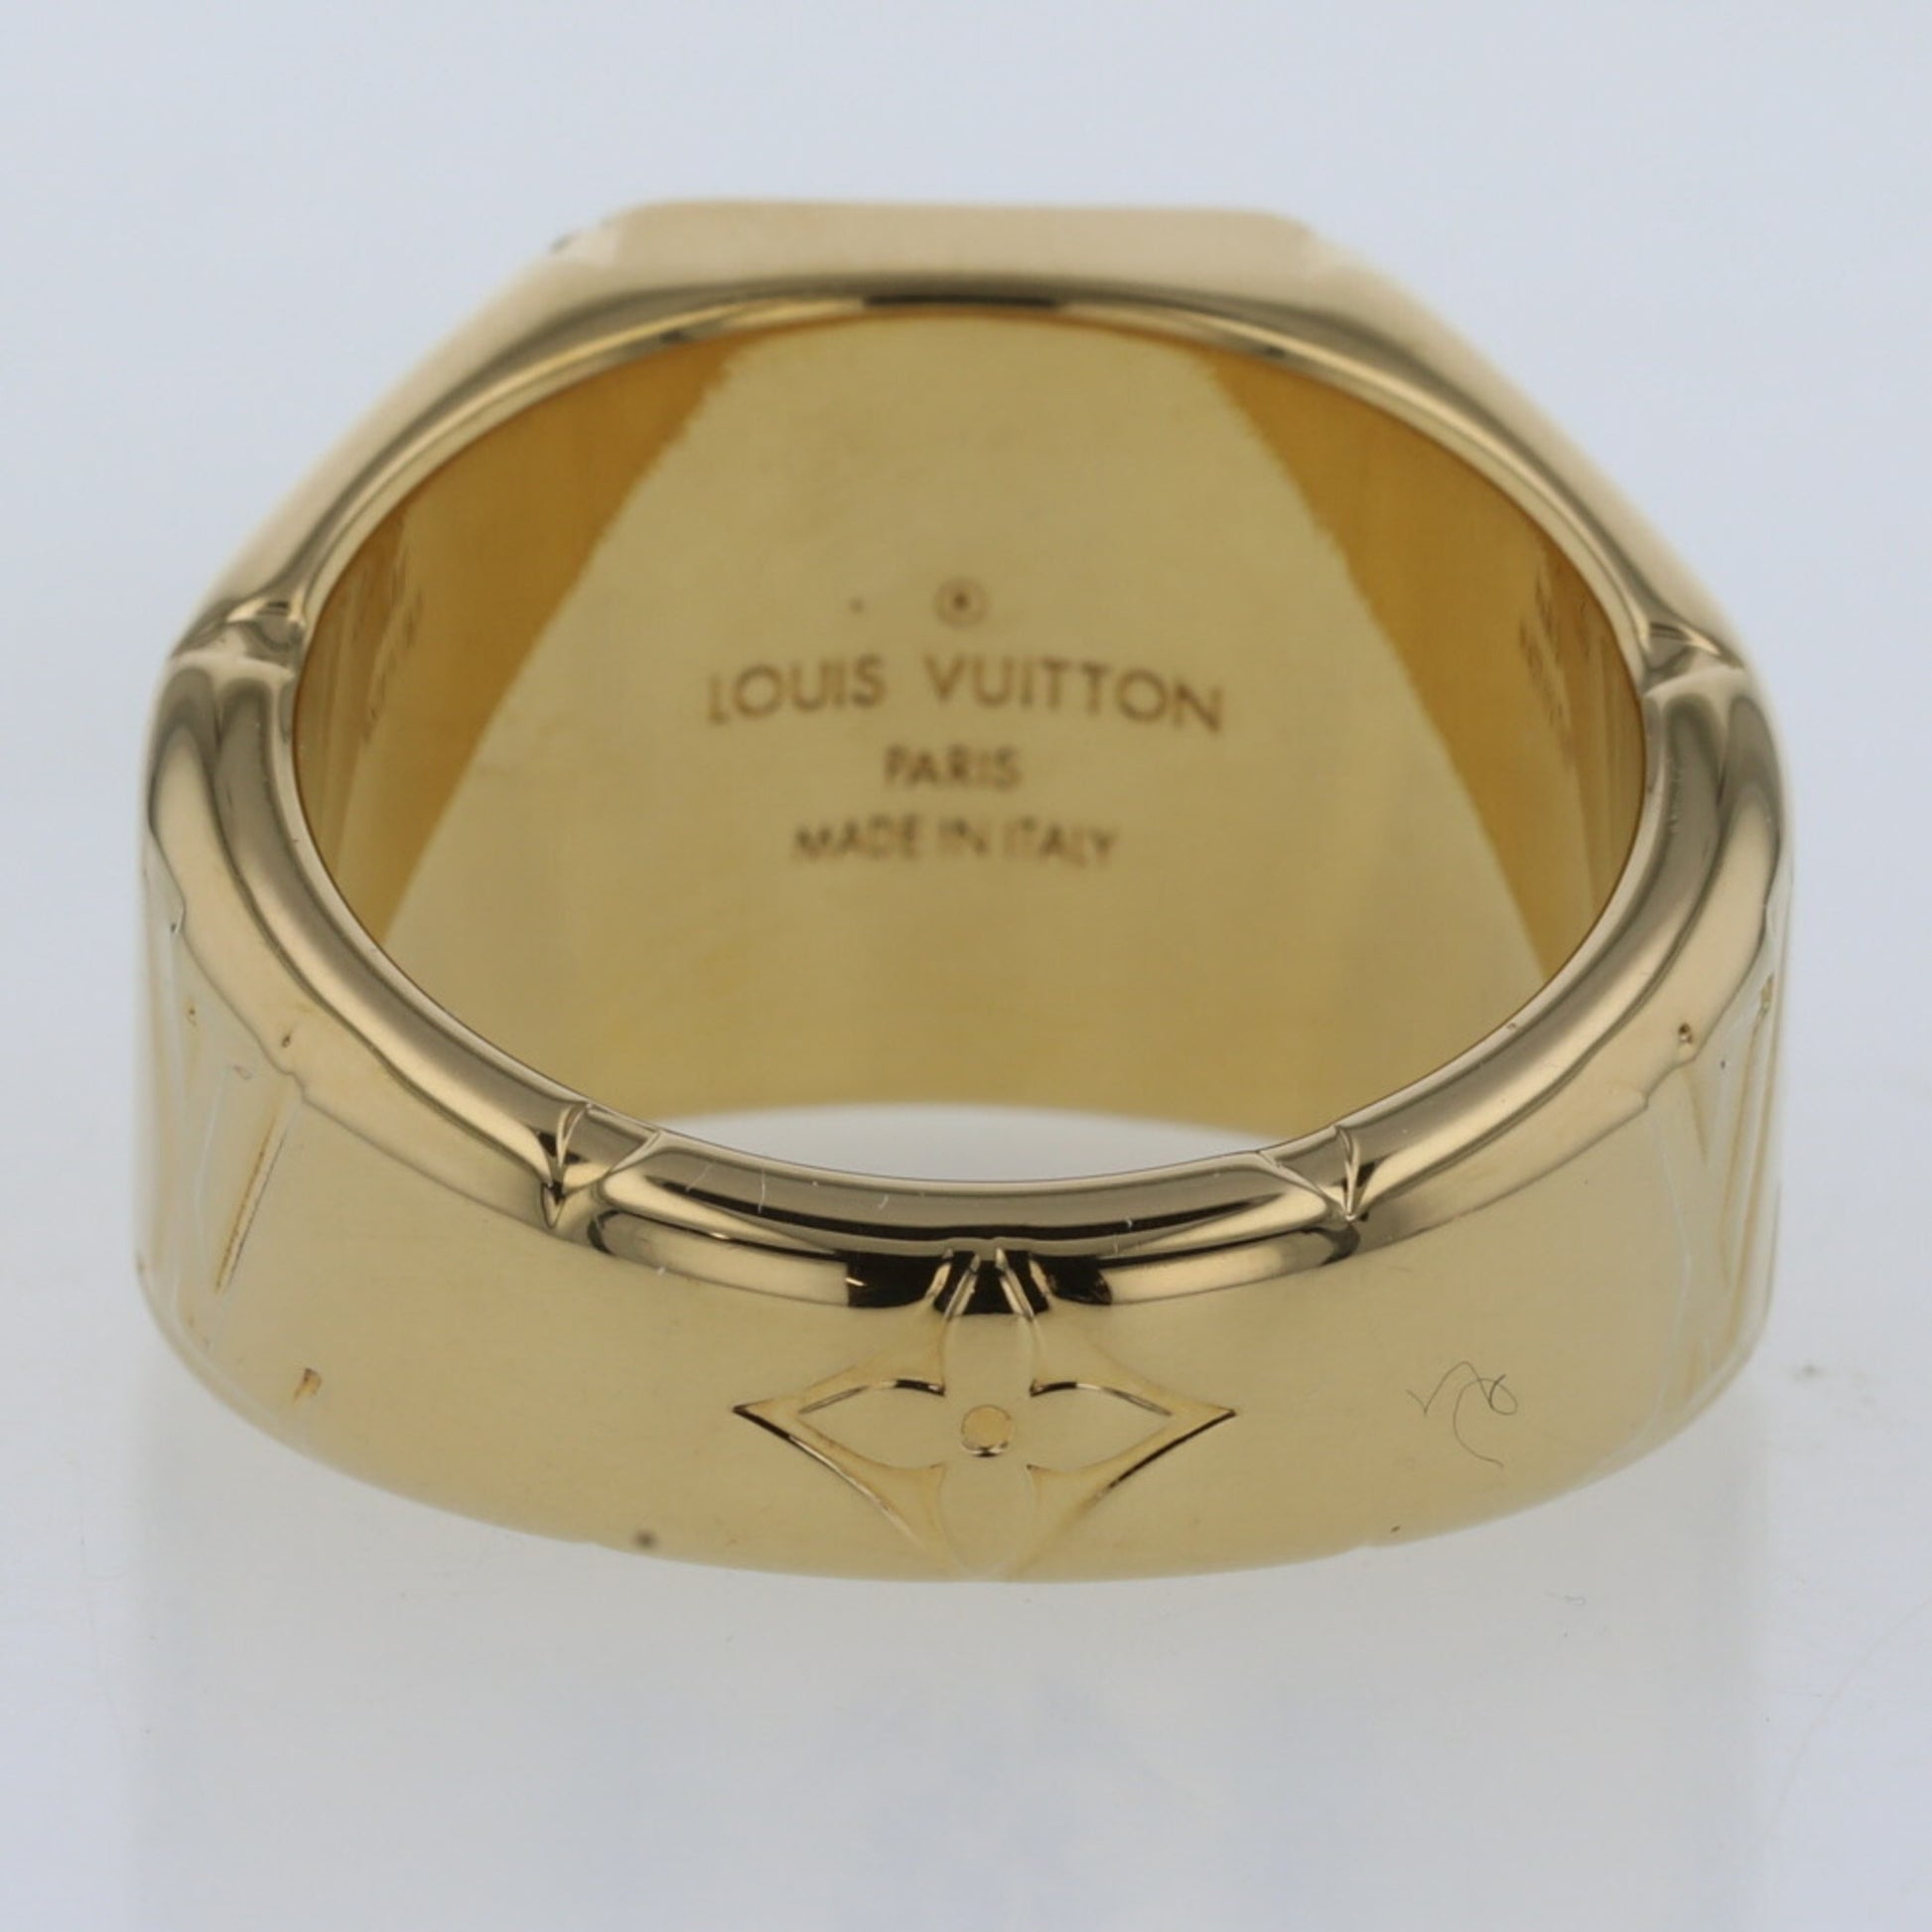 Shop Louis Vuitton Monogram Signet Ring (M80190) by SkyNS